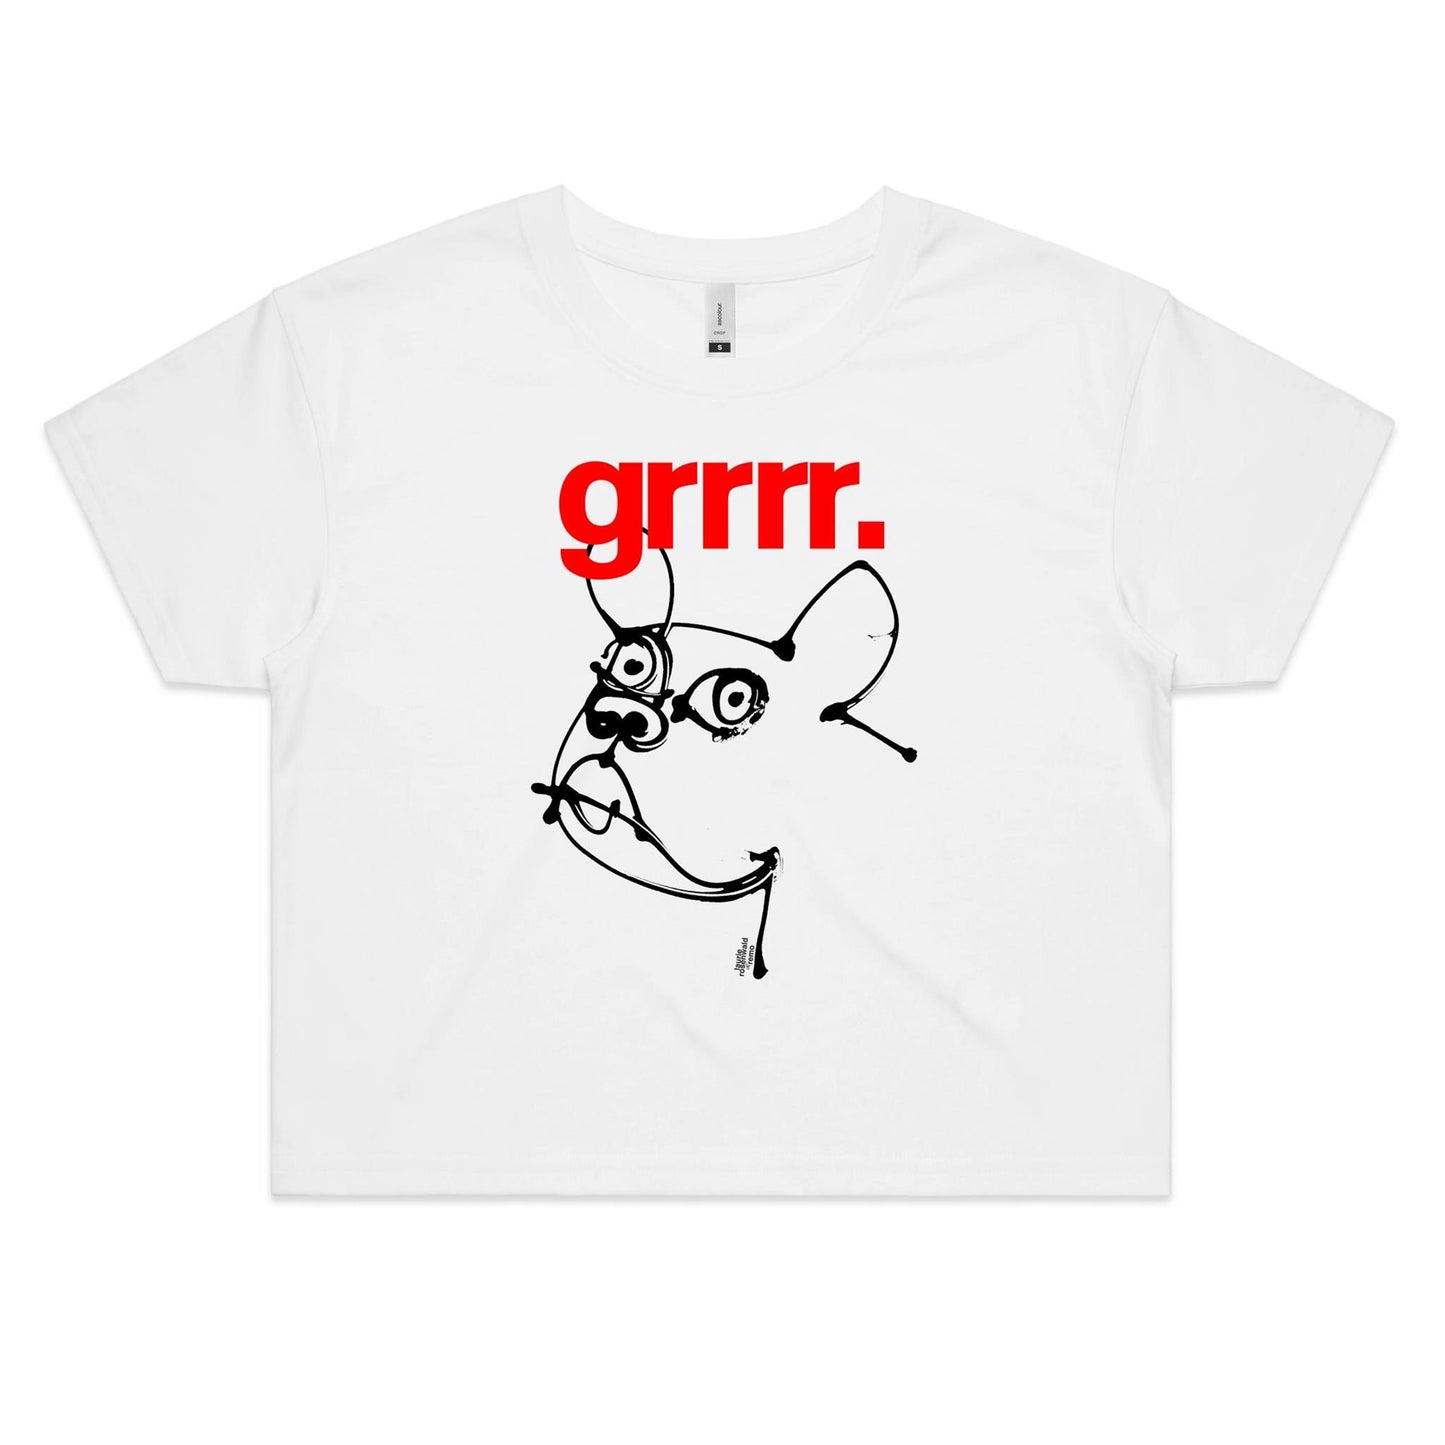 grr! Crop T Shirts for Women